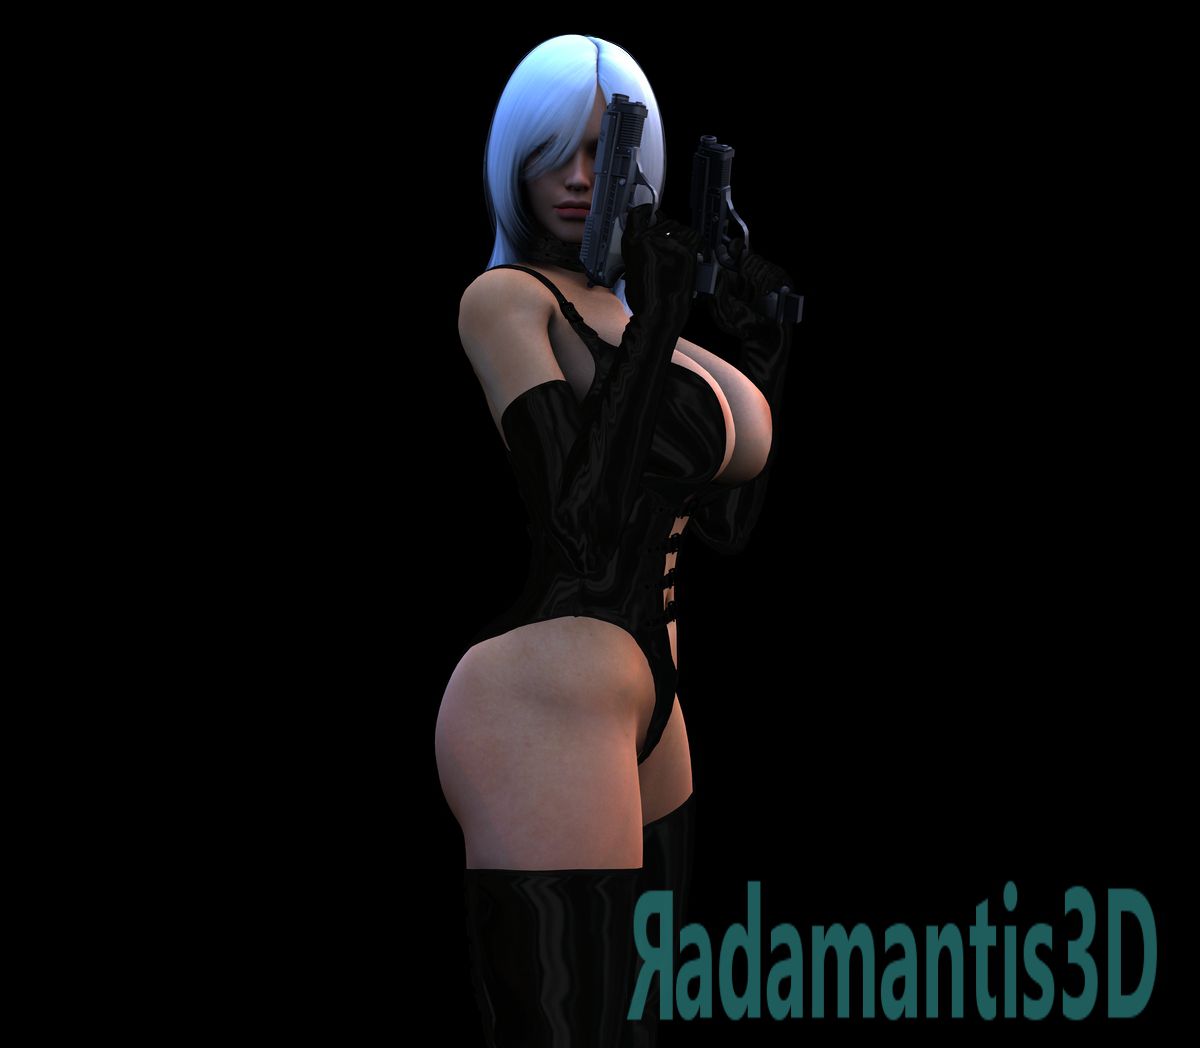 [DEVIANTART]radamantis3d's collection [3D] 34